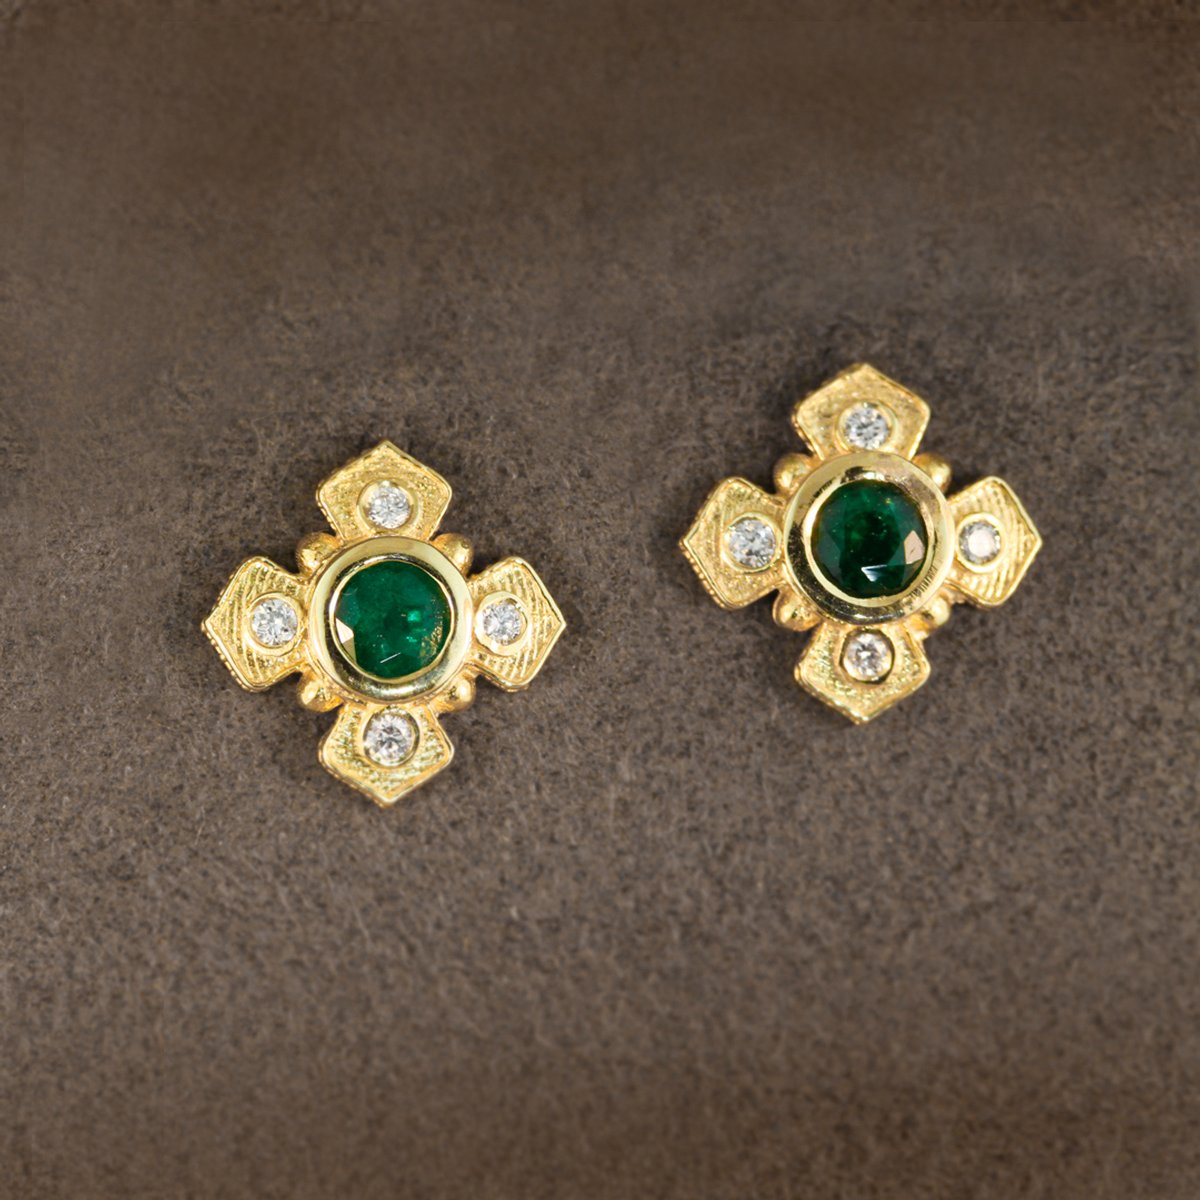 Persephone 14K Gold, Emerald and Diamond Earrings